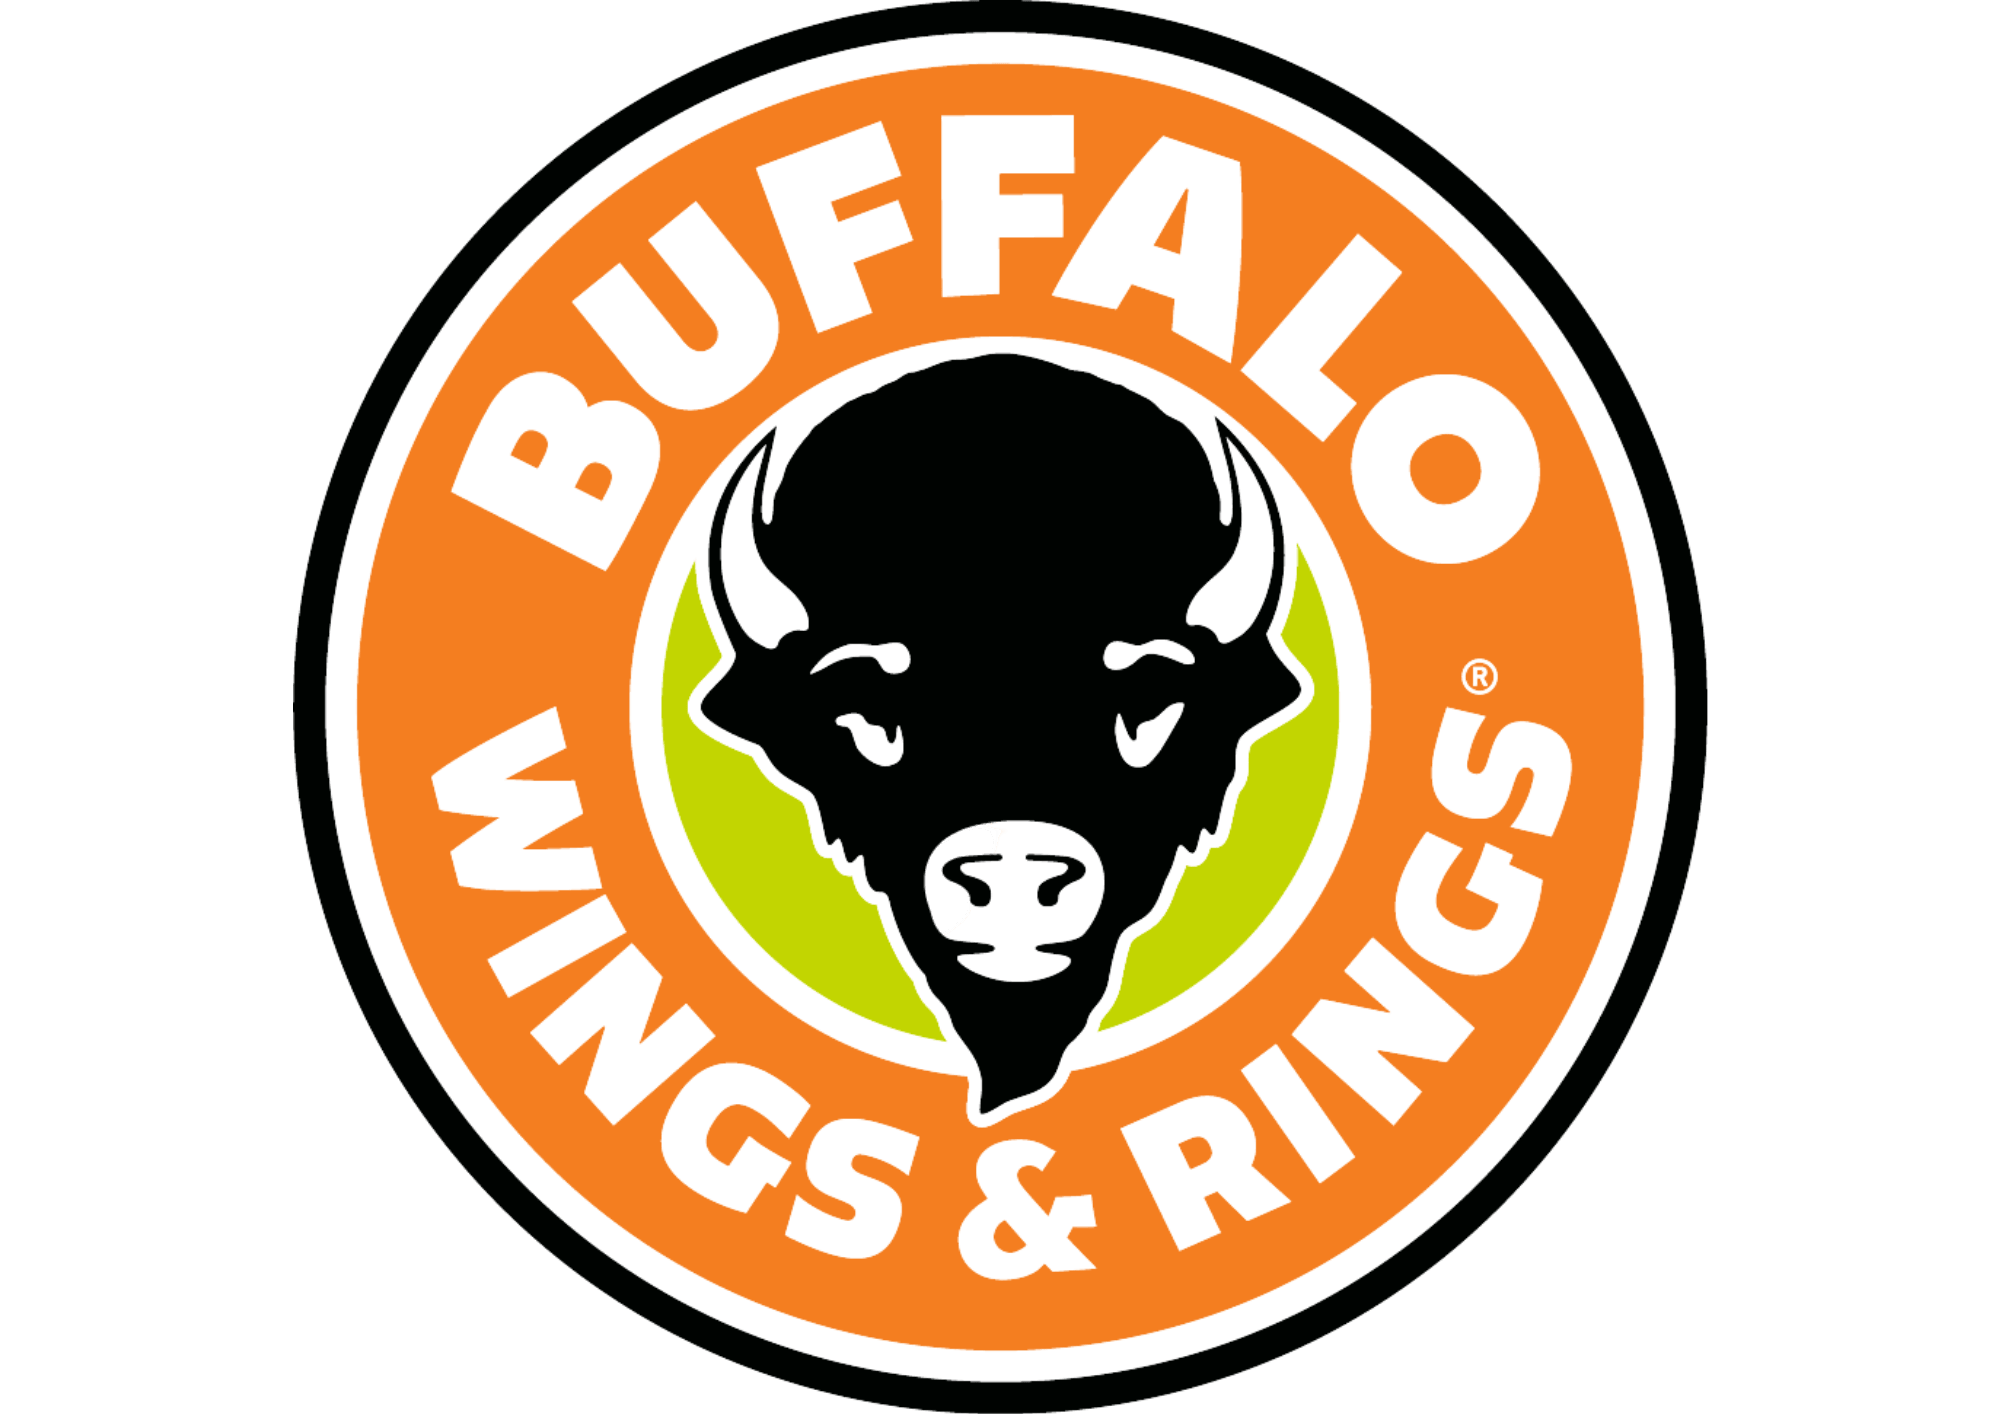 Buffalo Wings and Rings